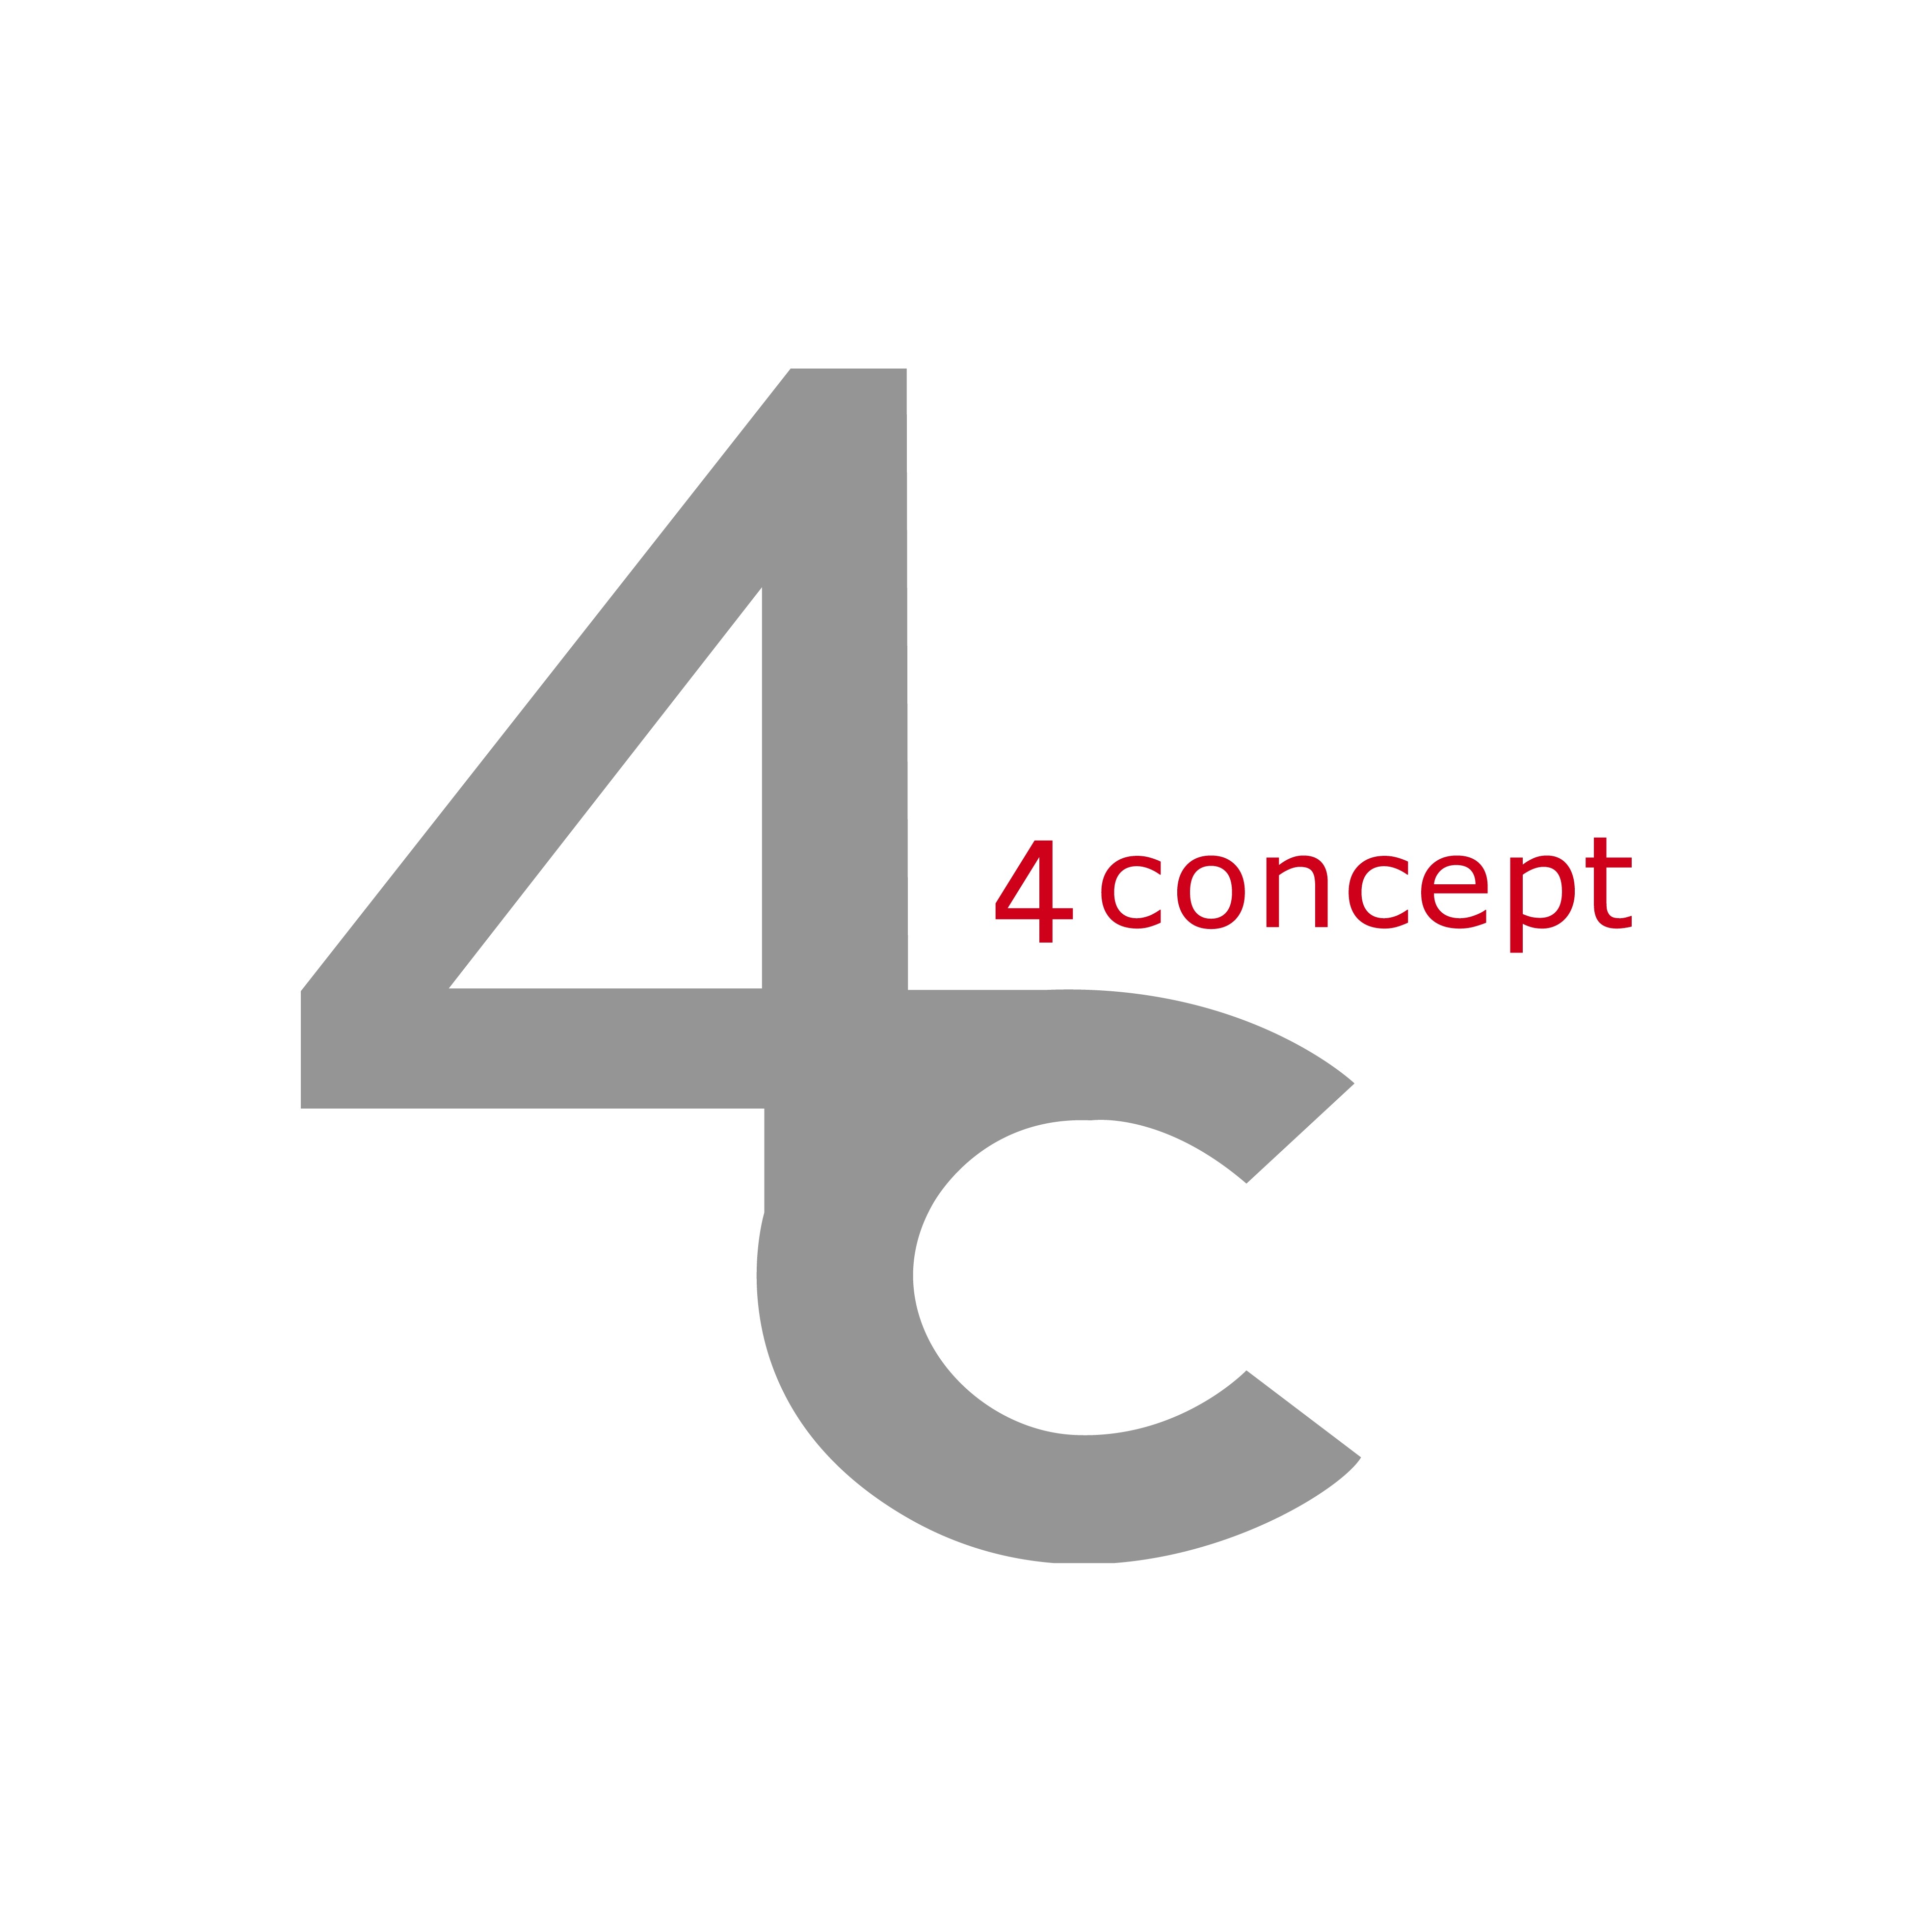 4 Concept